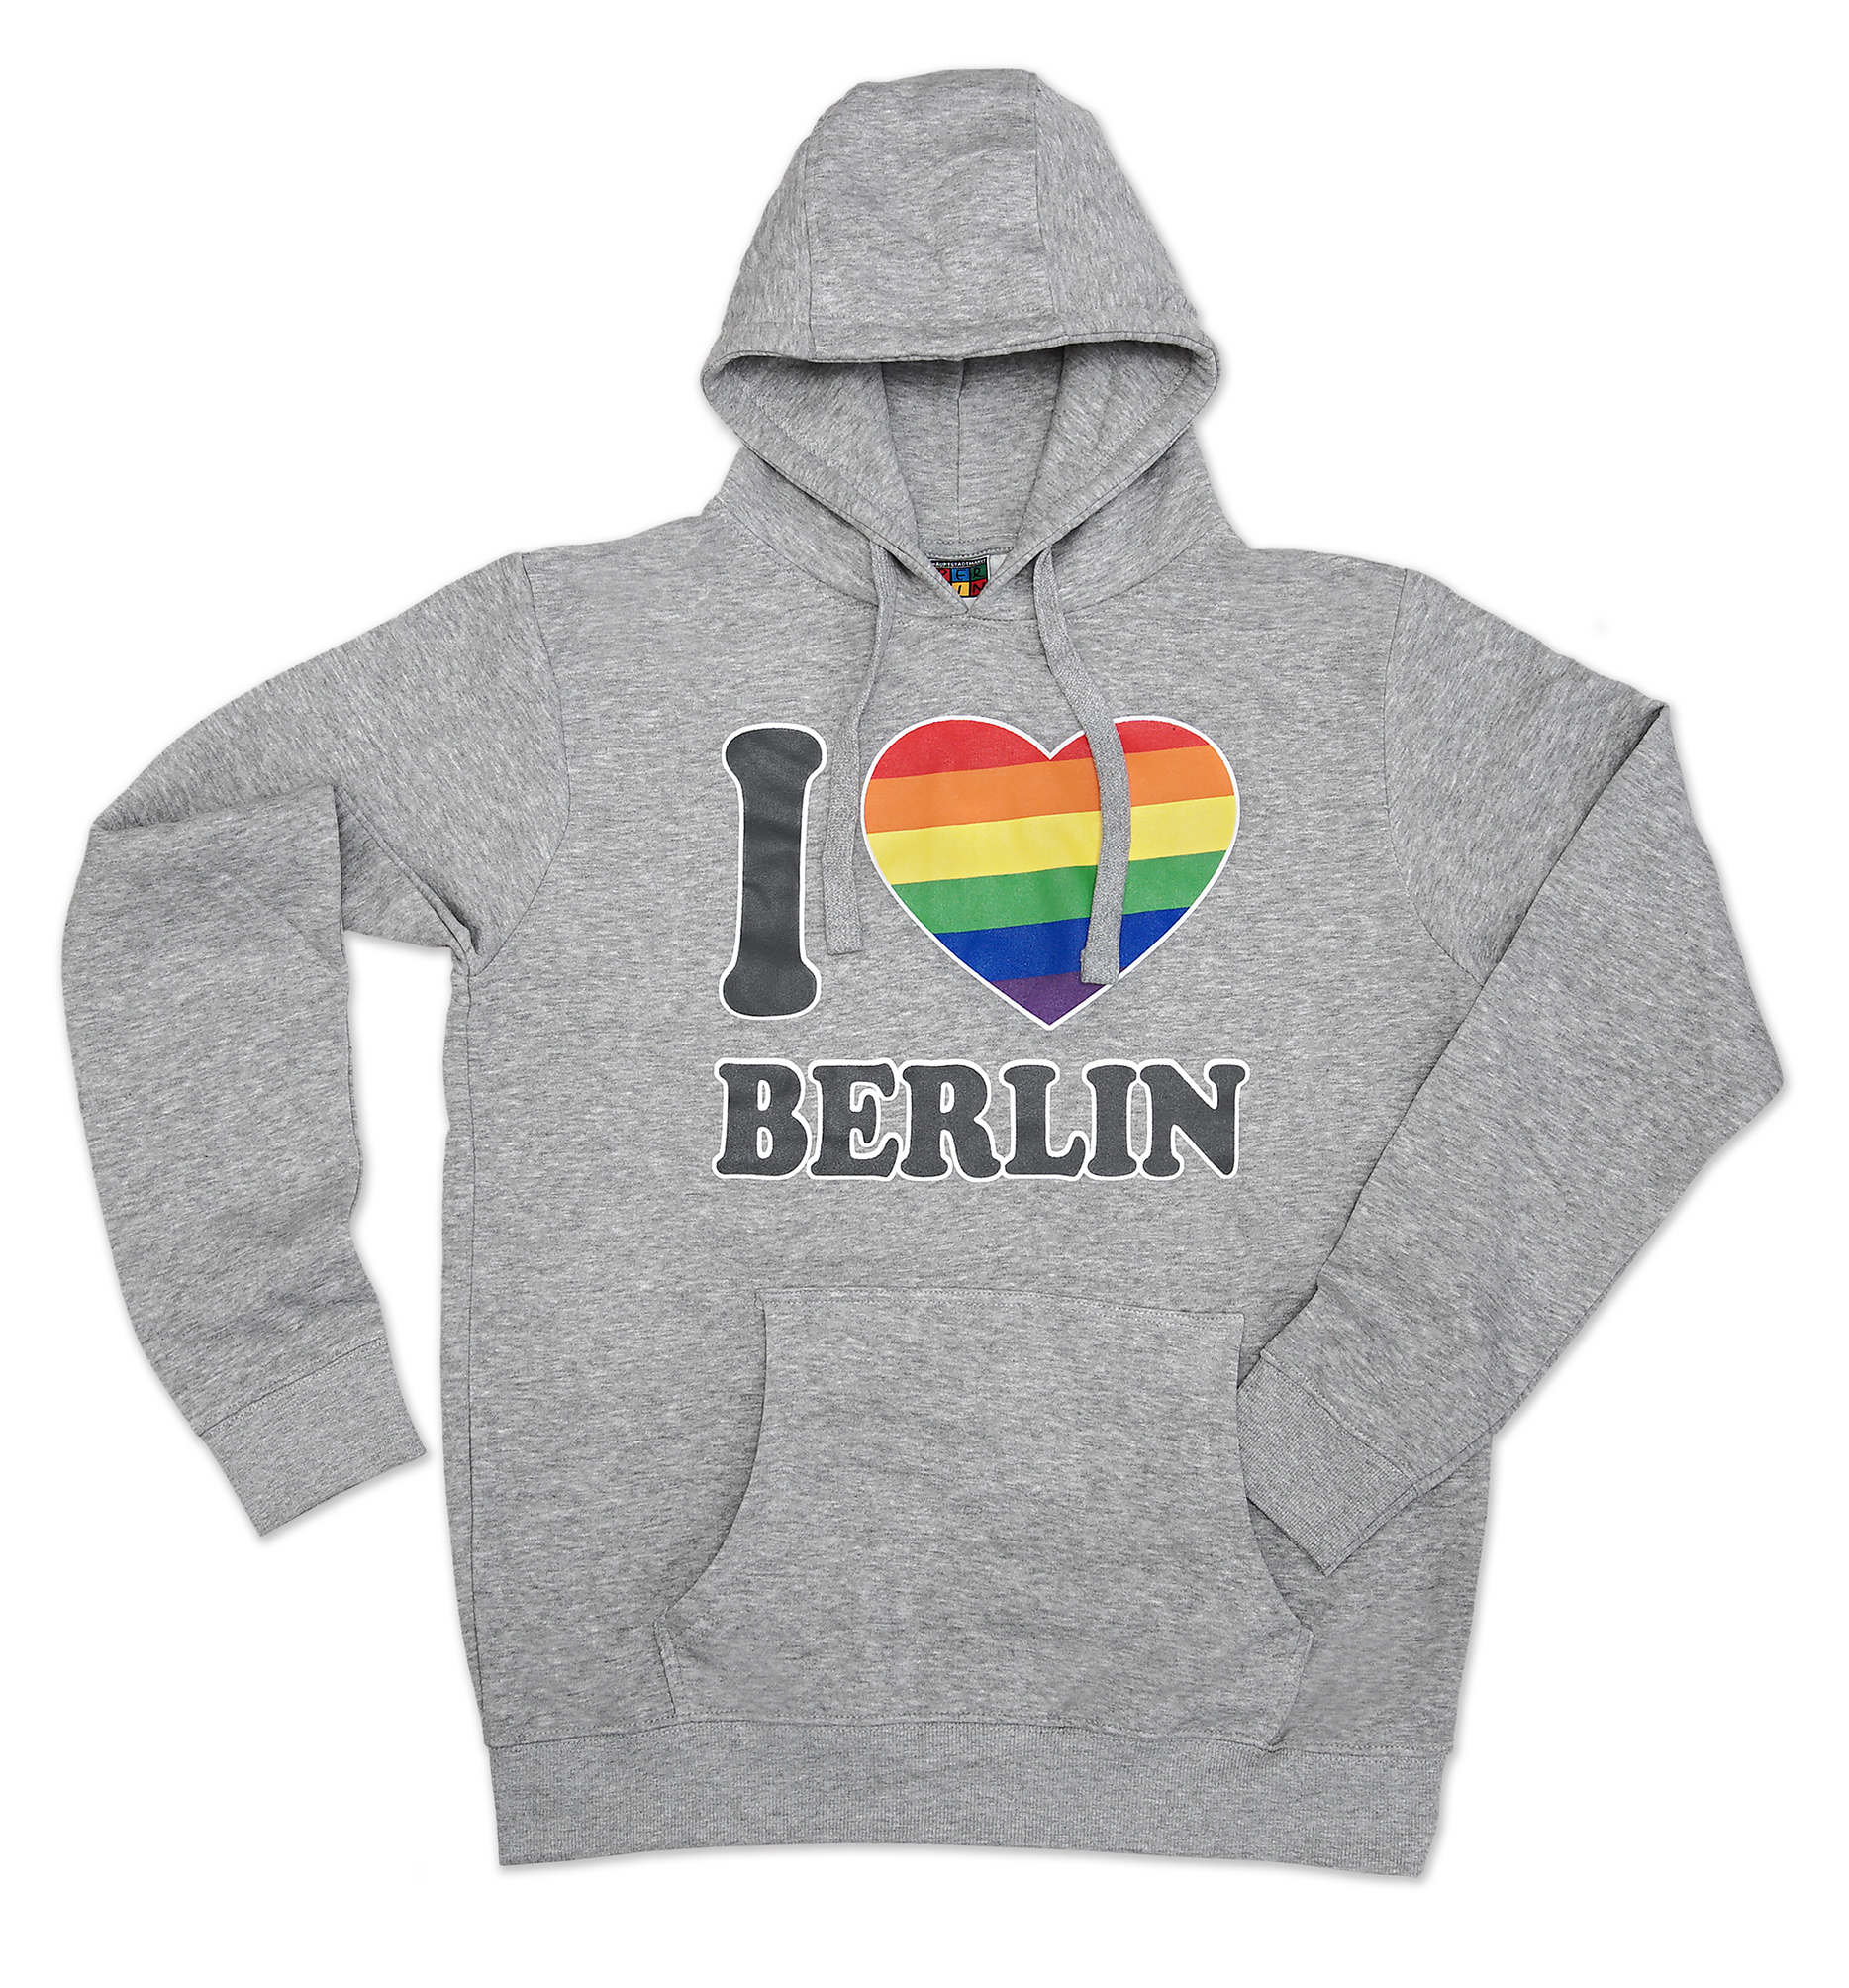 Kap-Sweatshirt "I love BERLIN" Regenbogen 